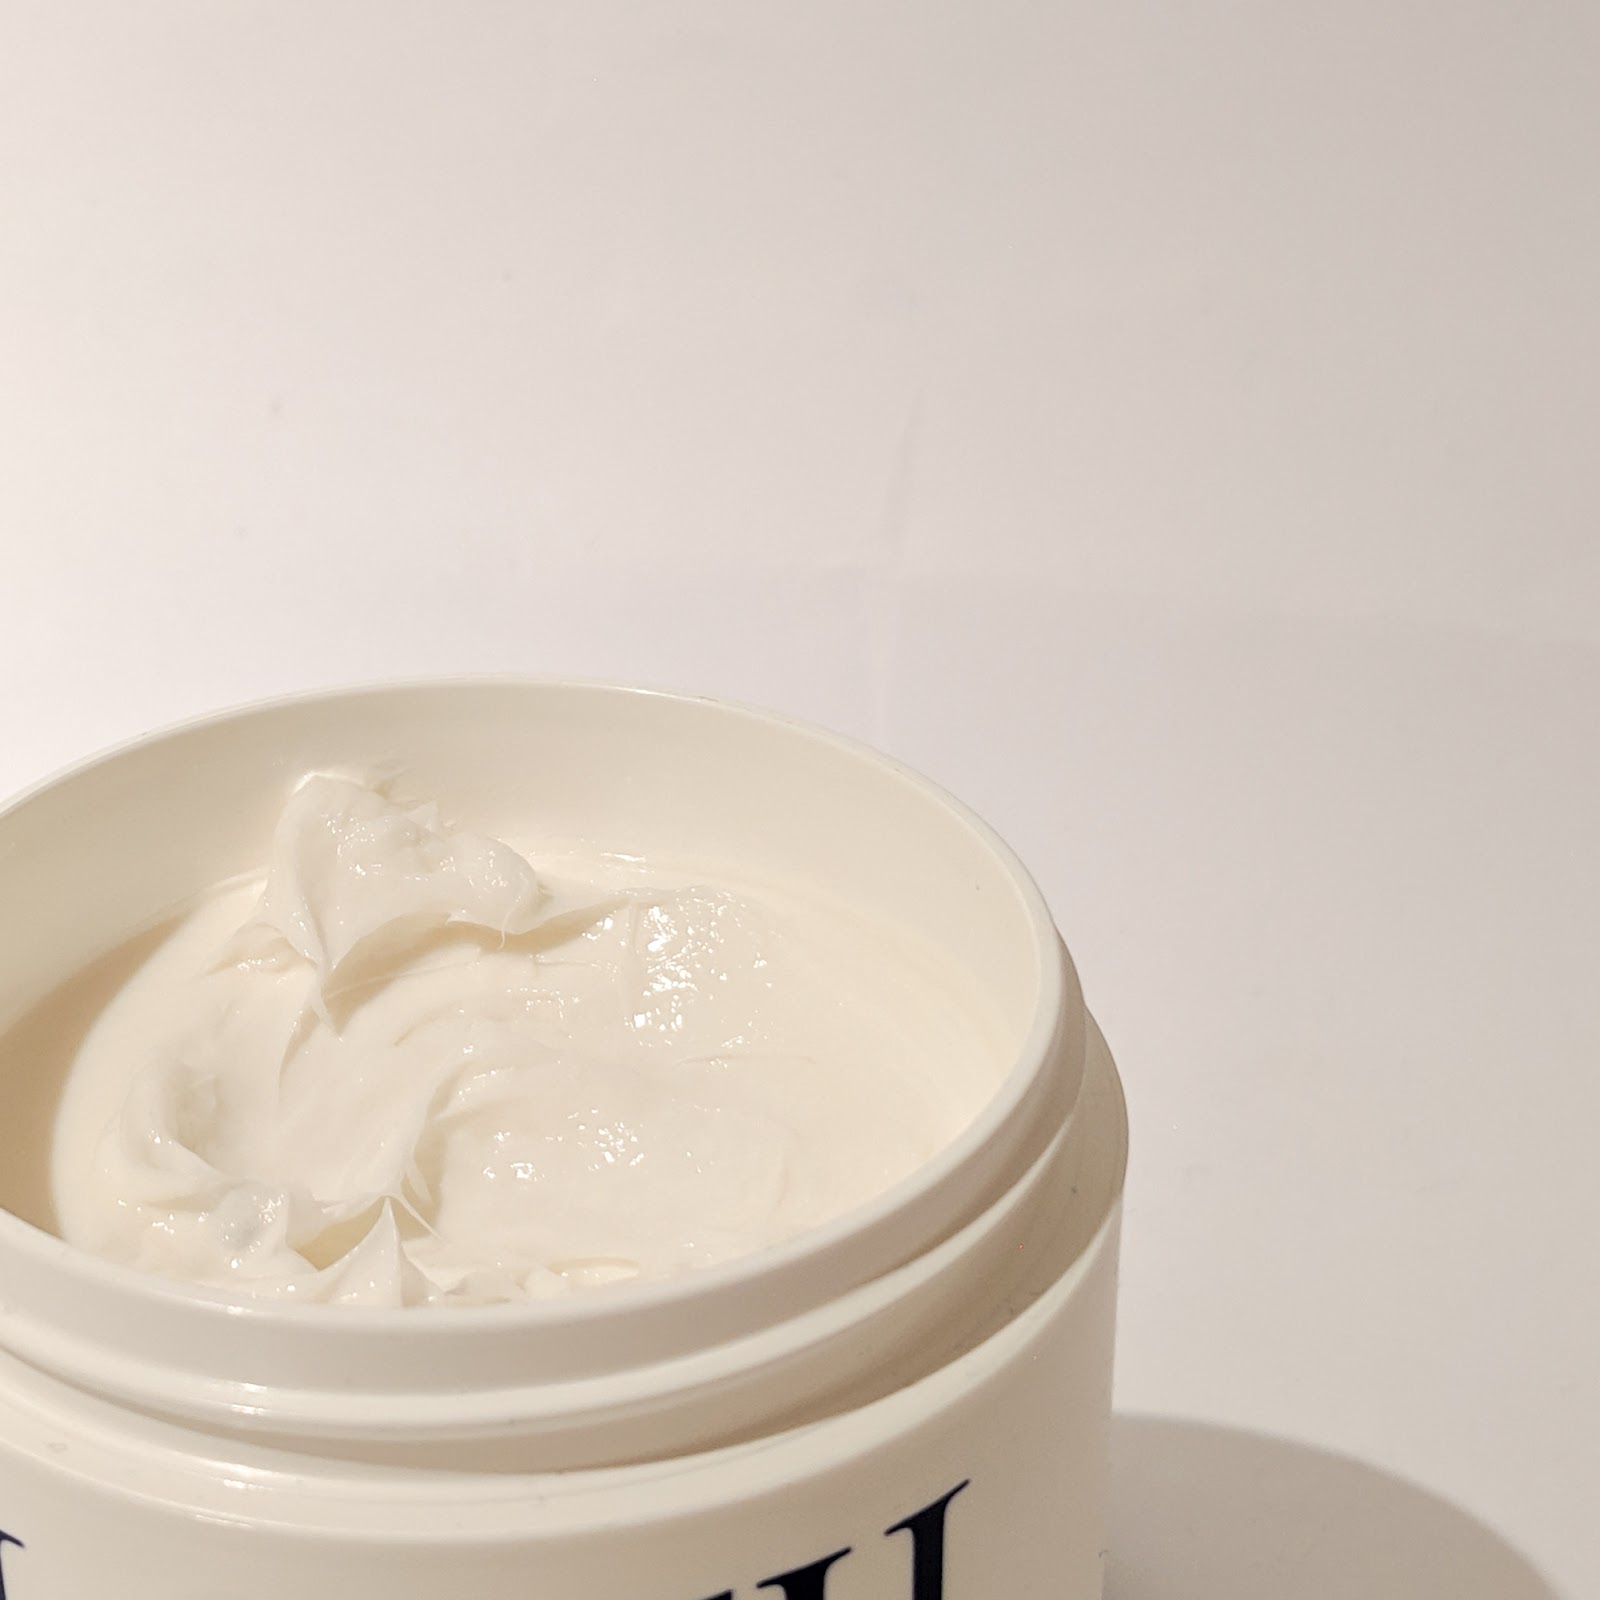 A close up image of a tub of Lotil Moisturising Cream